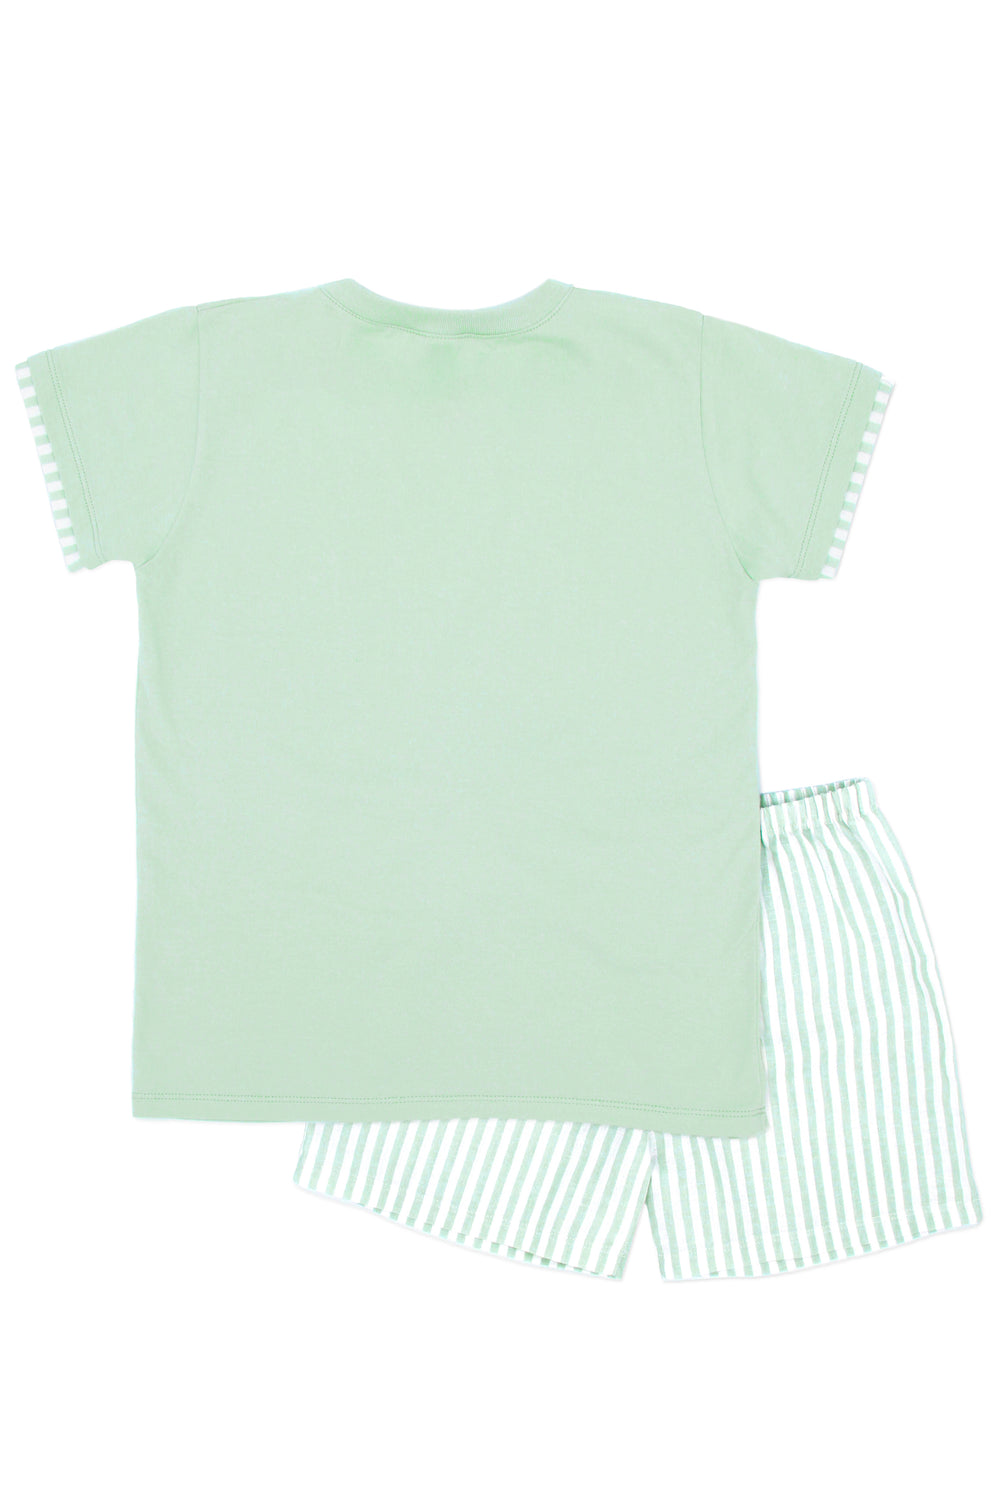 Rapife "Roman" Sage Green Stripe T-Shirt & Shorts | Millie and John